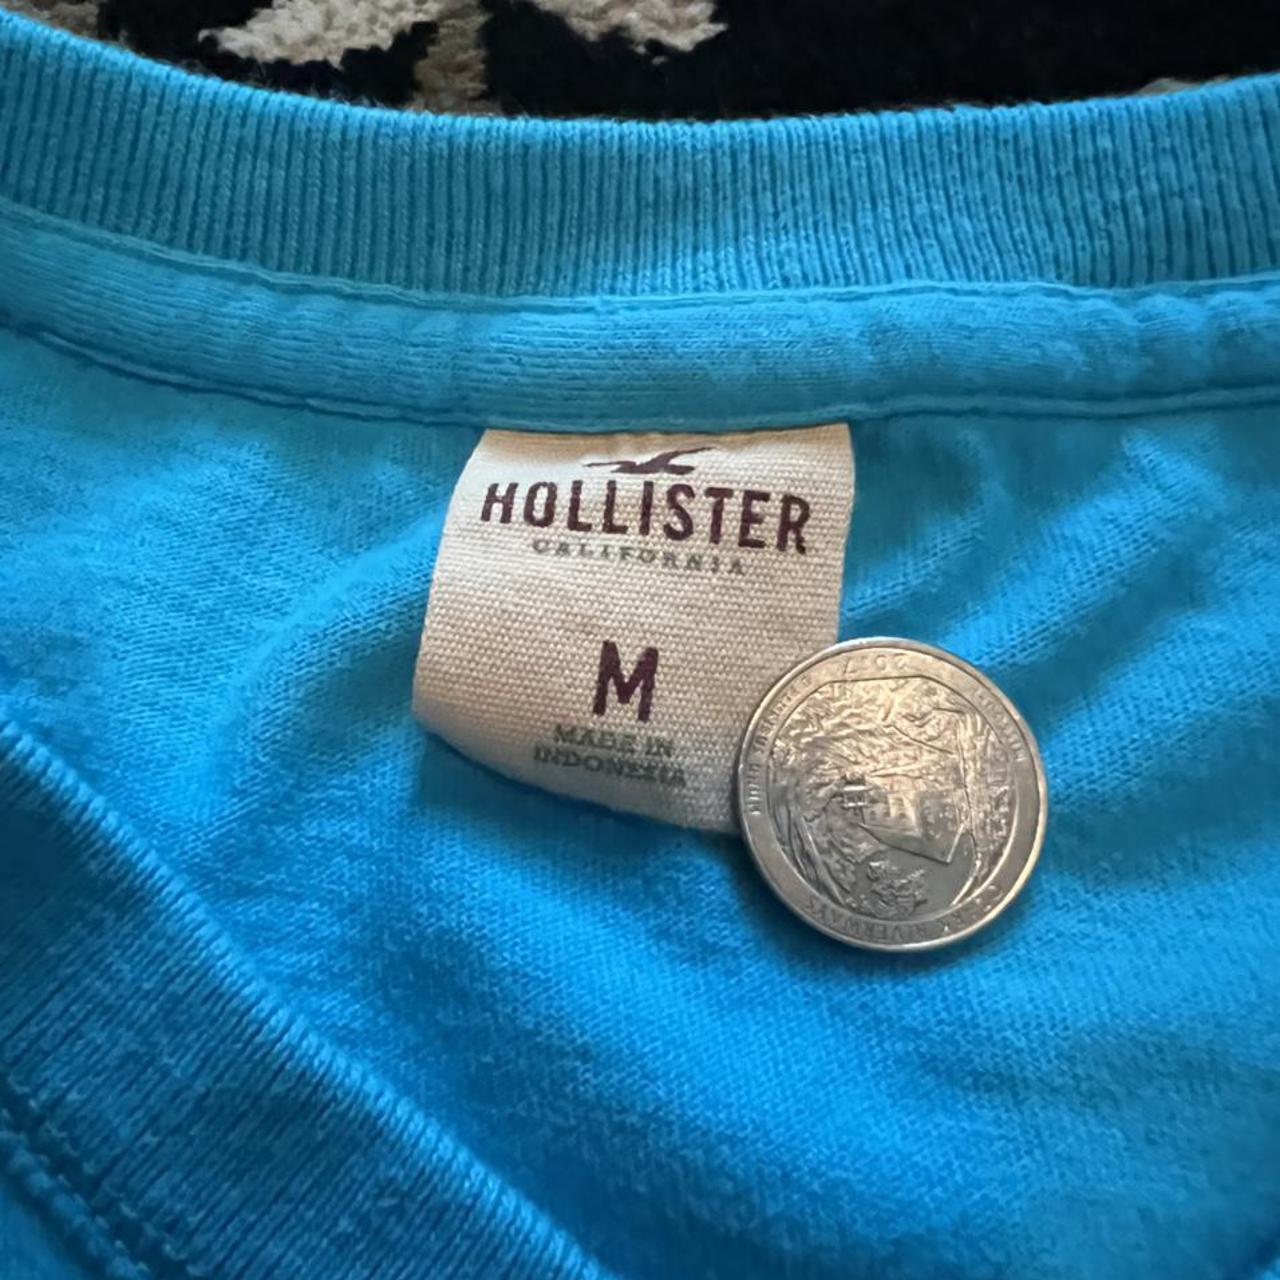 Hollister England Recognized Brands